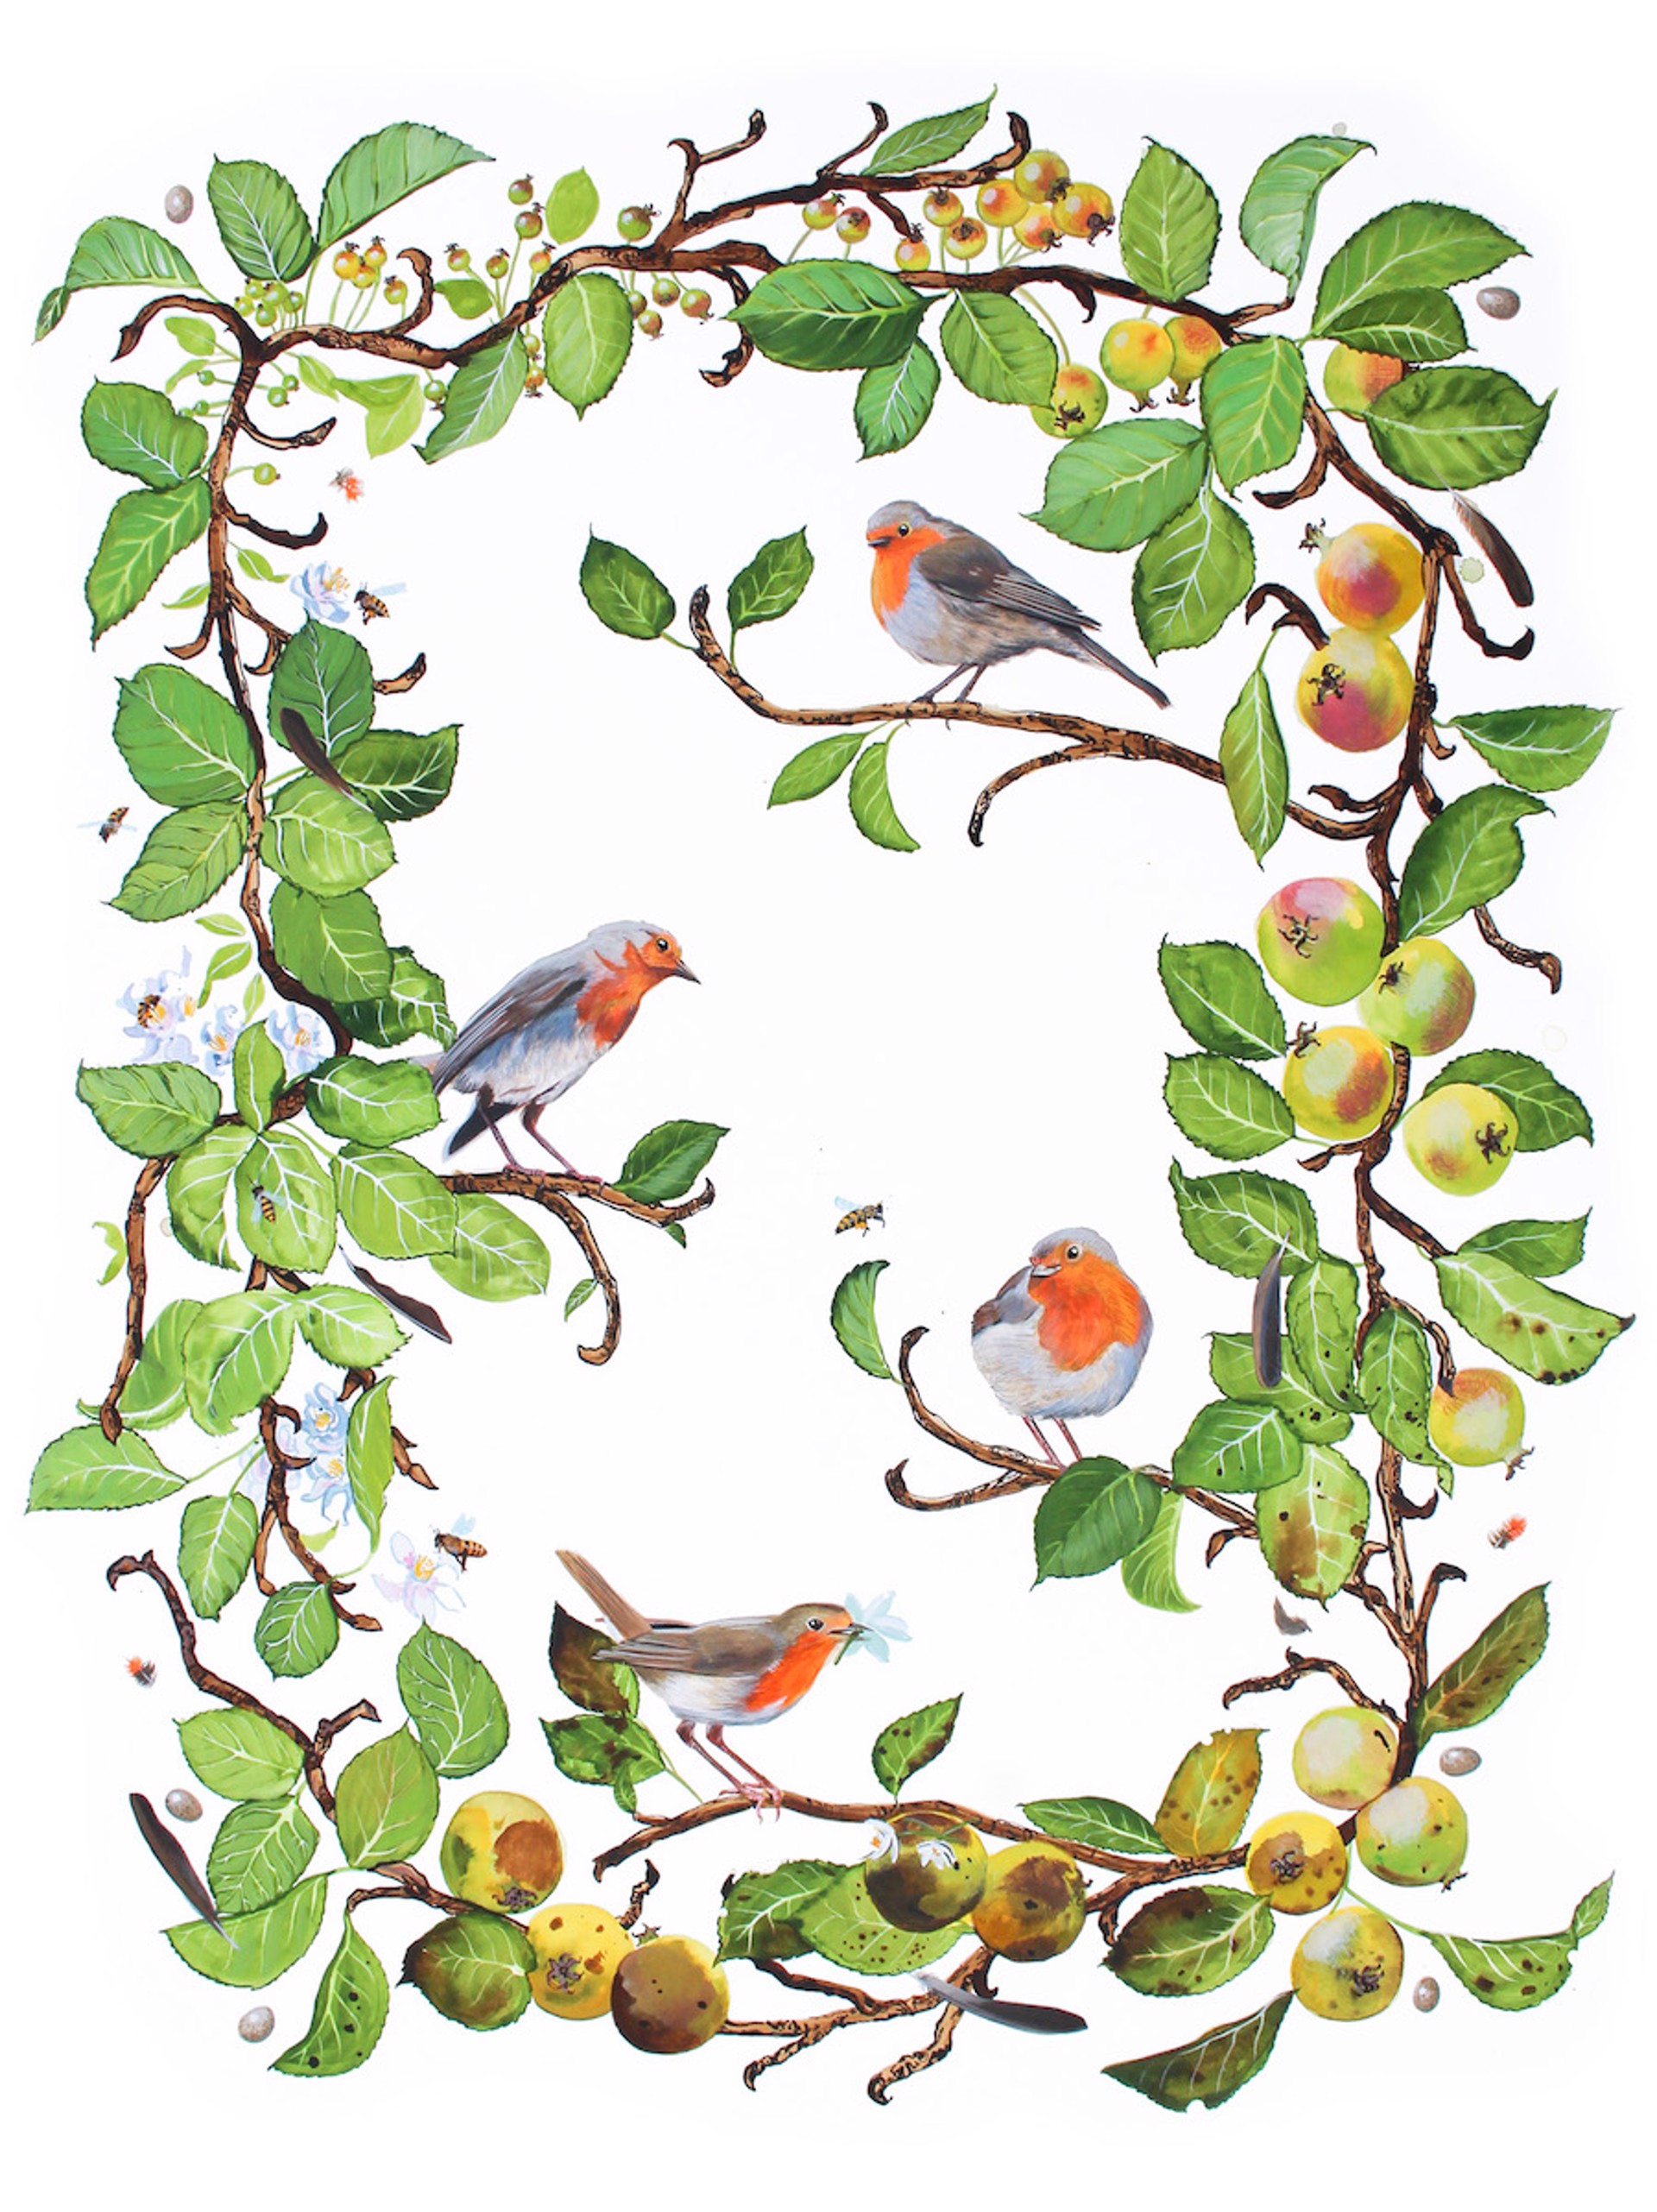 Birds of Shakespeare: European Robin (Erithacus rubecula) by Missy Dunaway